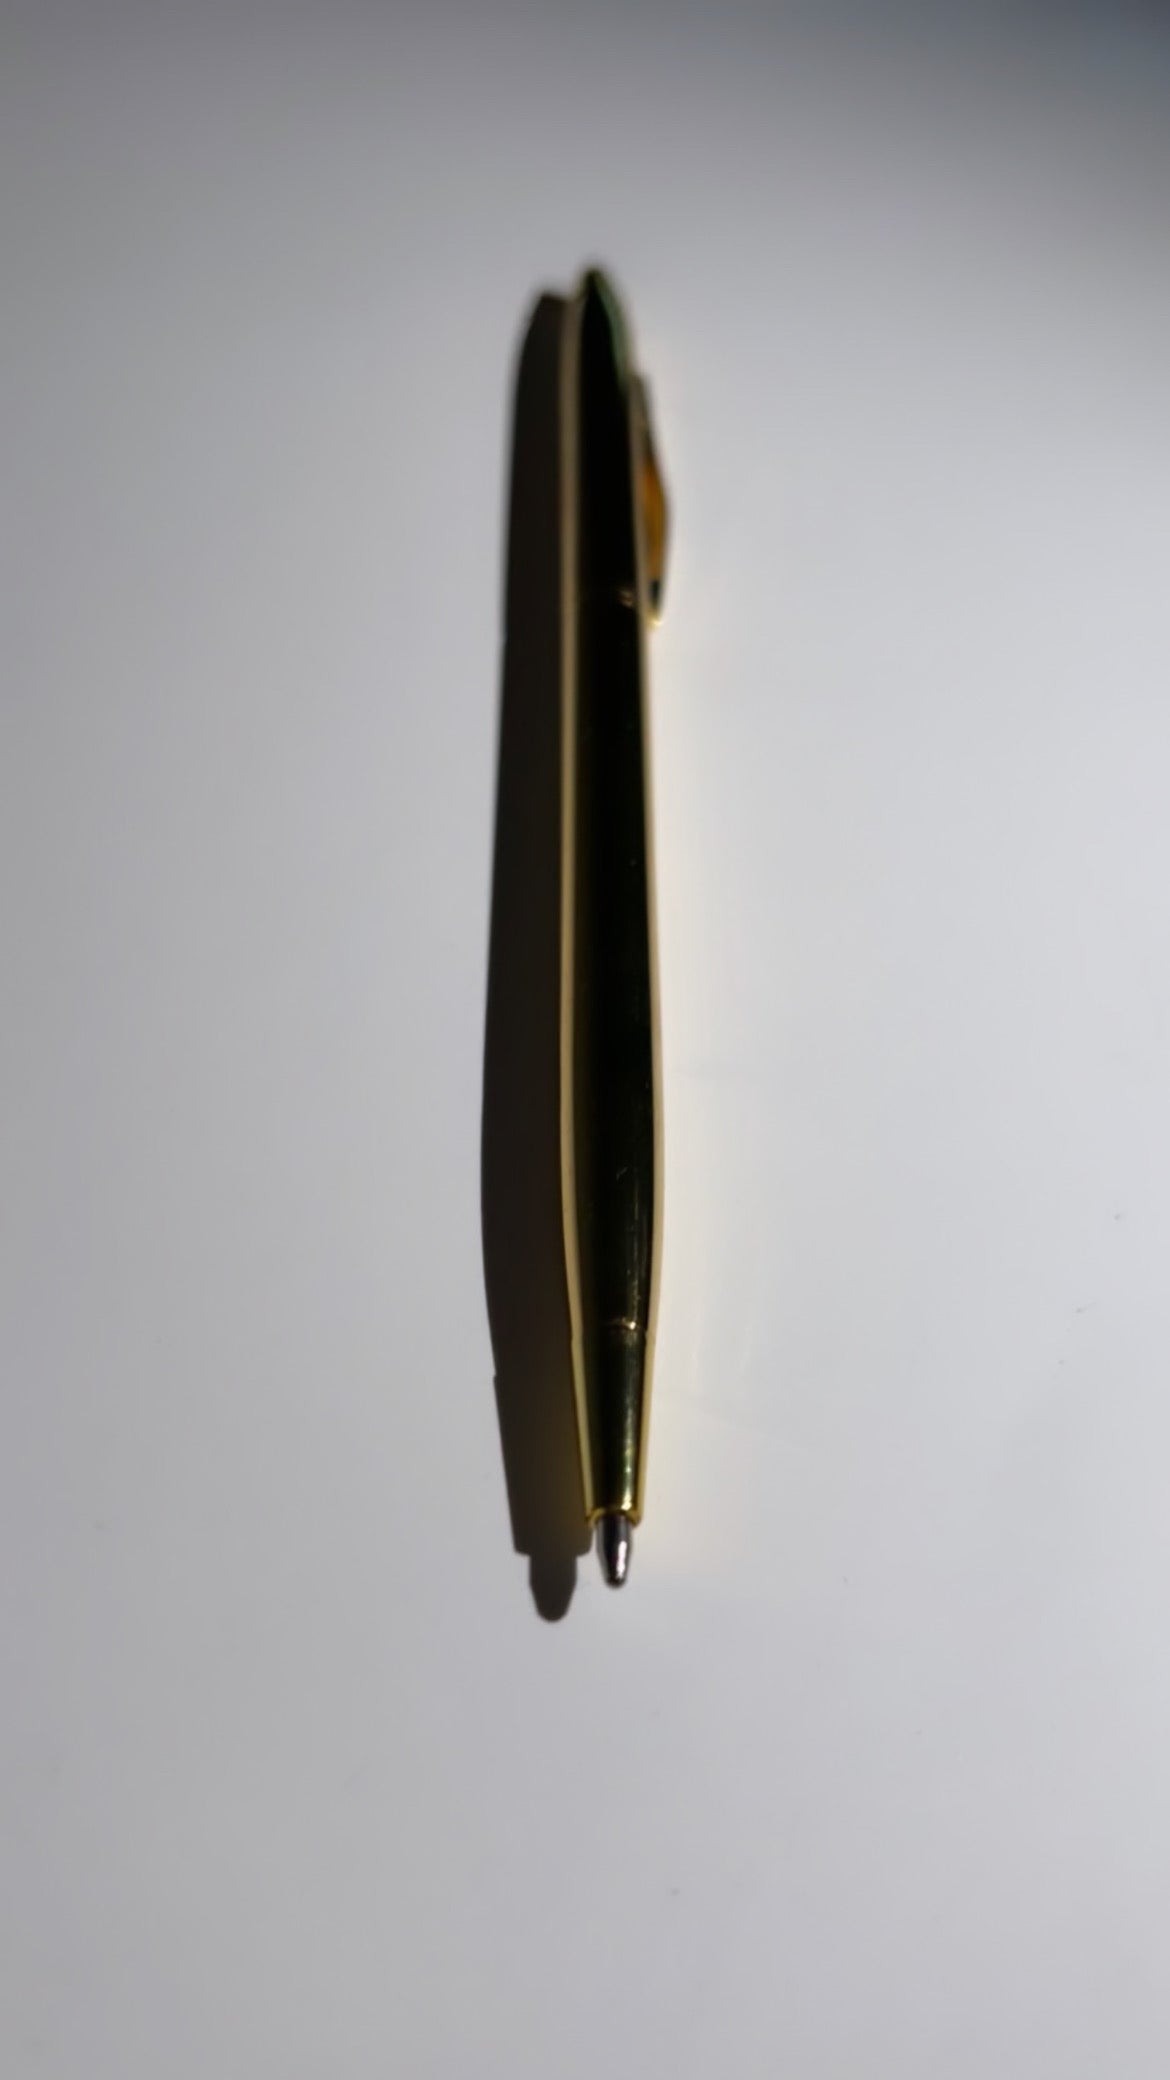 The GOAL Gold Pen